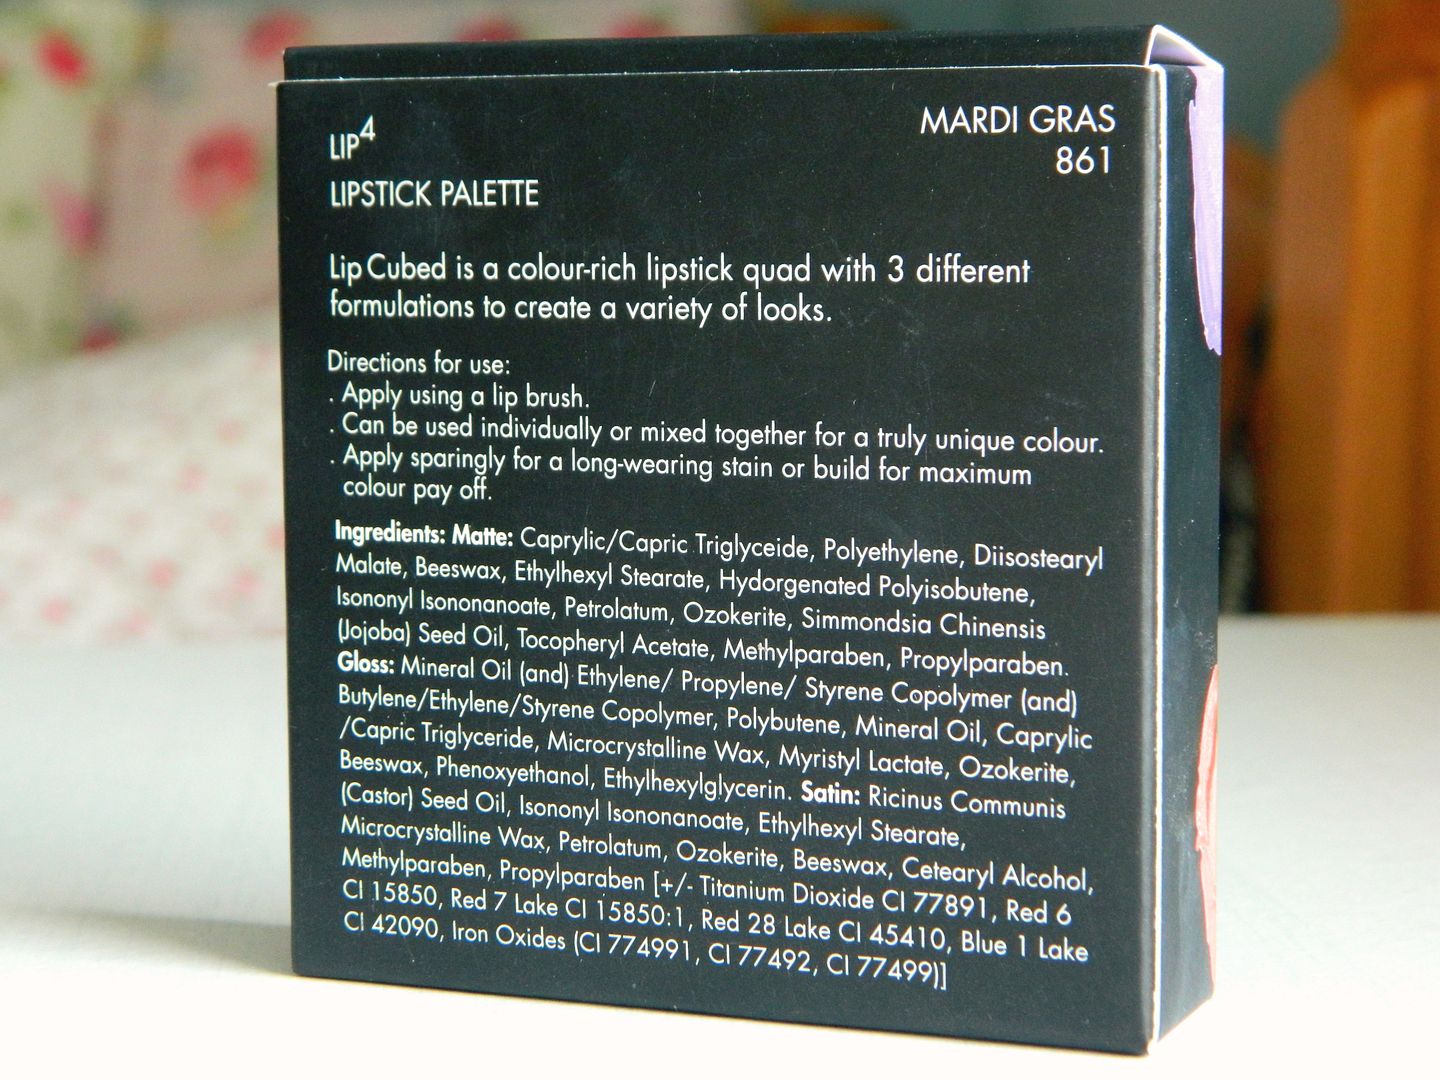 Sleek Lip 4 Palette in Mardi Gras Box Review Belle-amie UK Beauty Fashion Lifestyle Blog